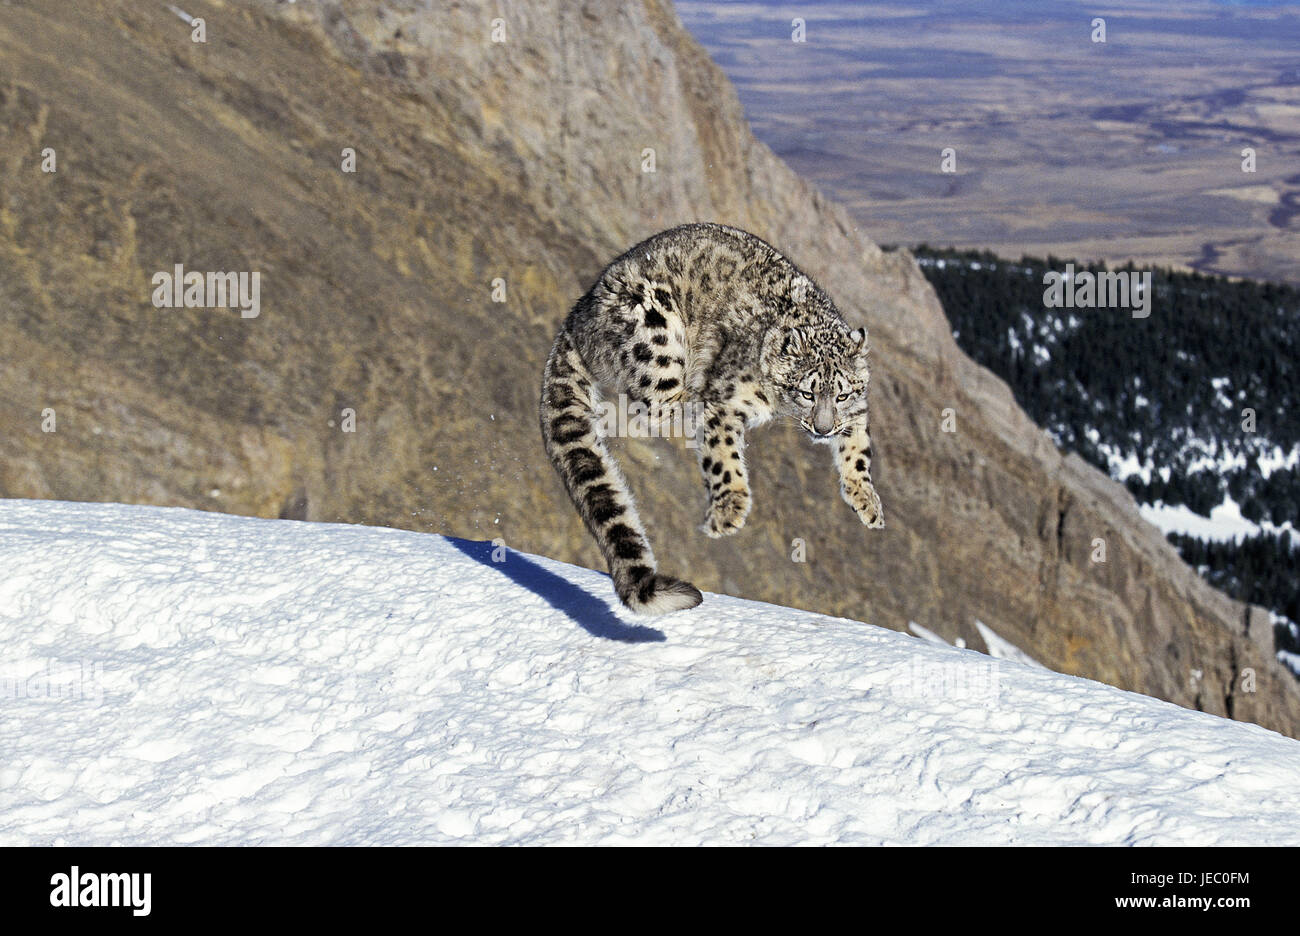 Snow leopard or Irbis, Panthera uncia, adult animal, jump, snow, Stock Photo